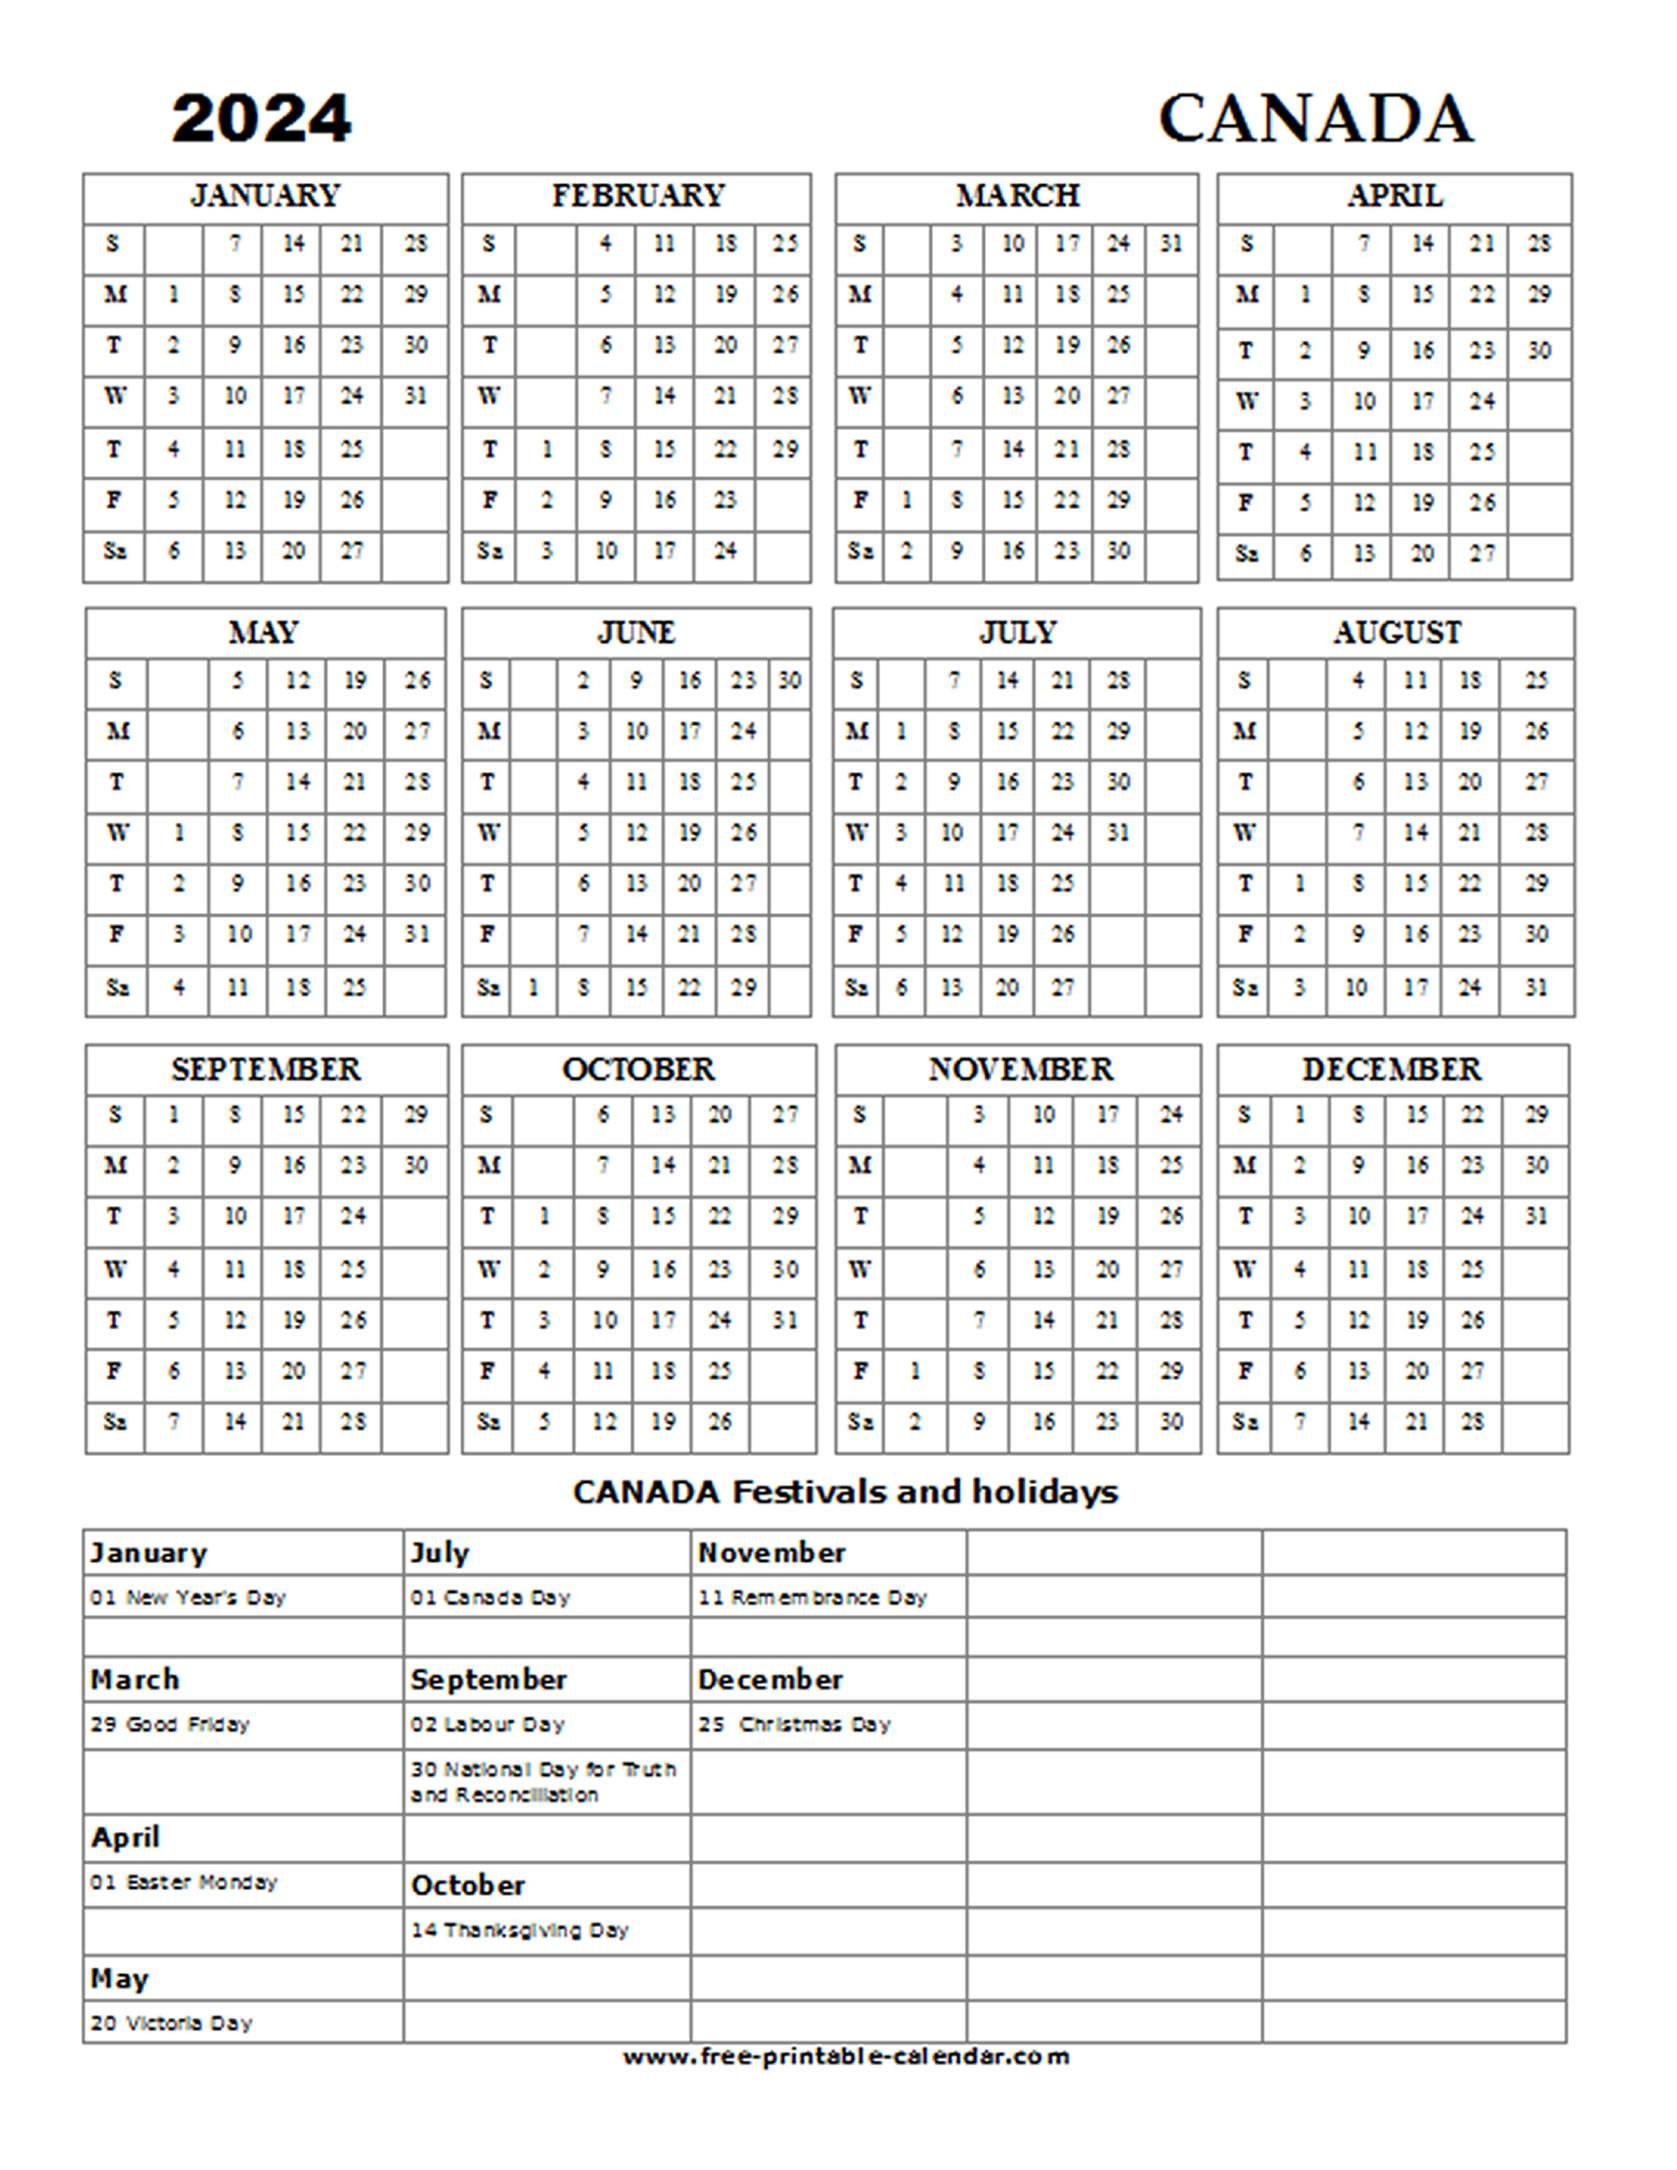 2024 Canada Holiday Calendar - Free-Printable-Calendar in Free Printable Calendar 2024 Canada